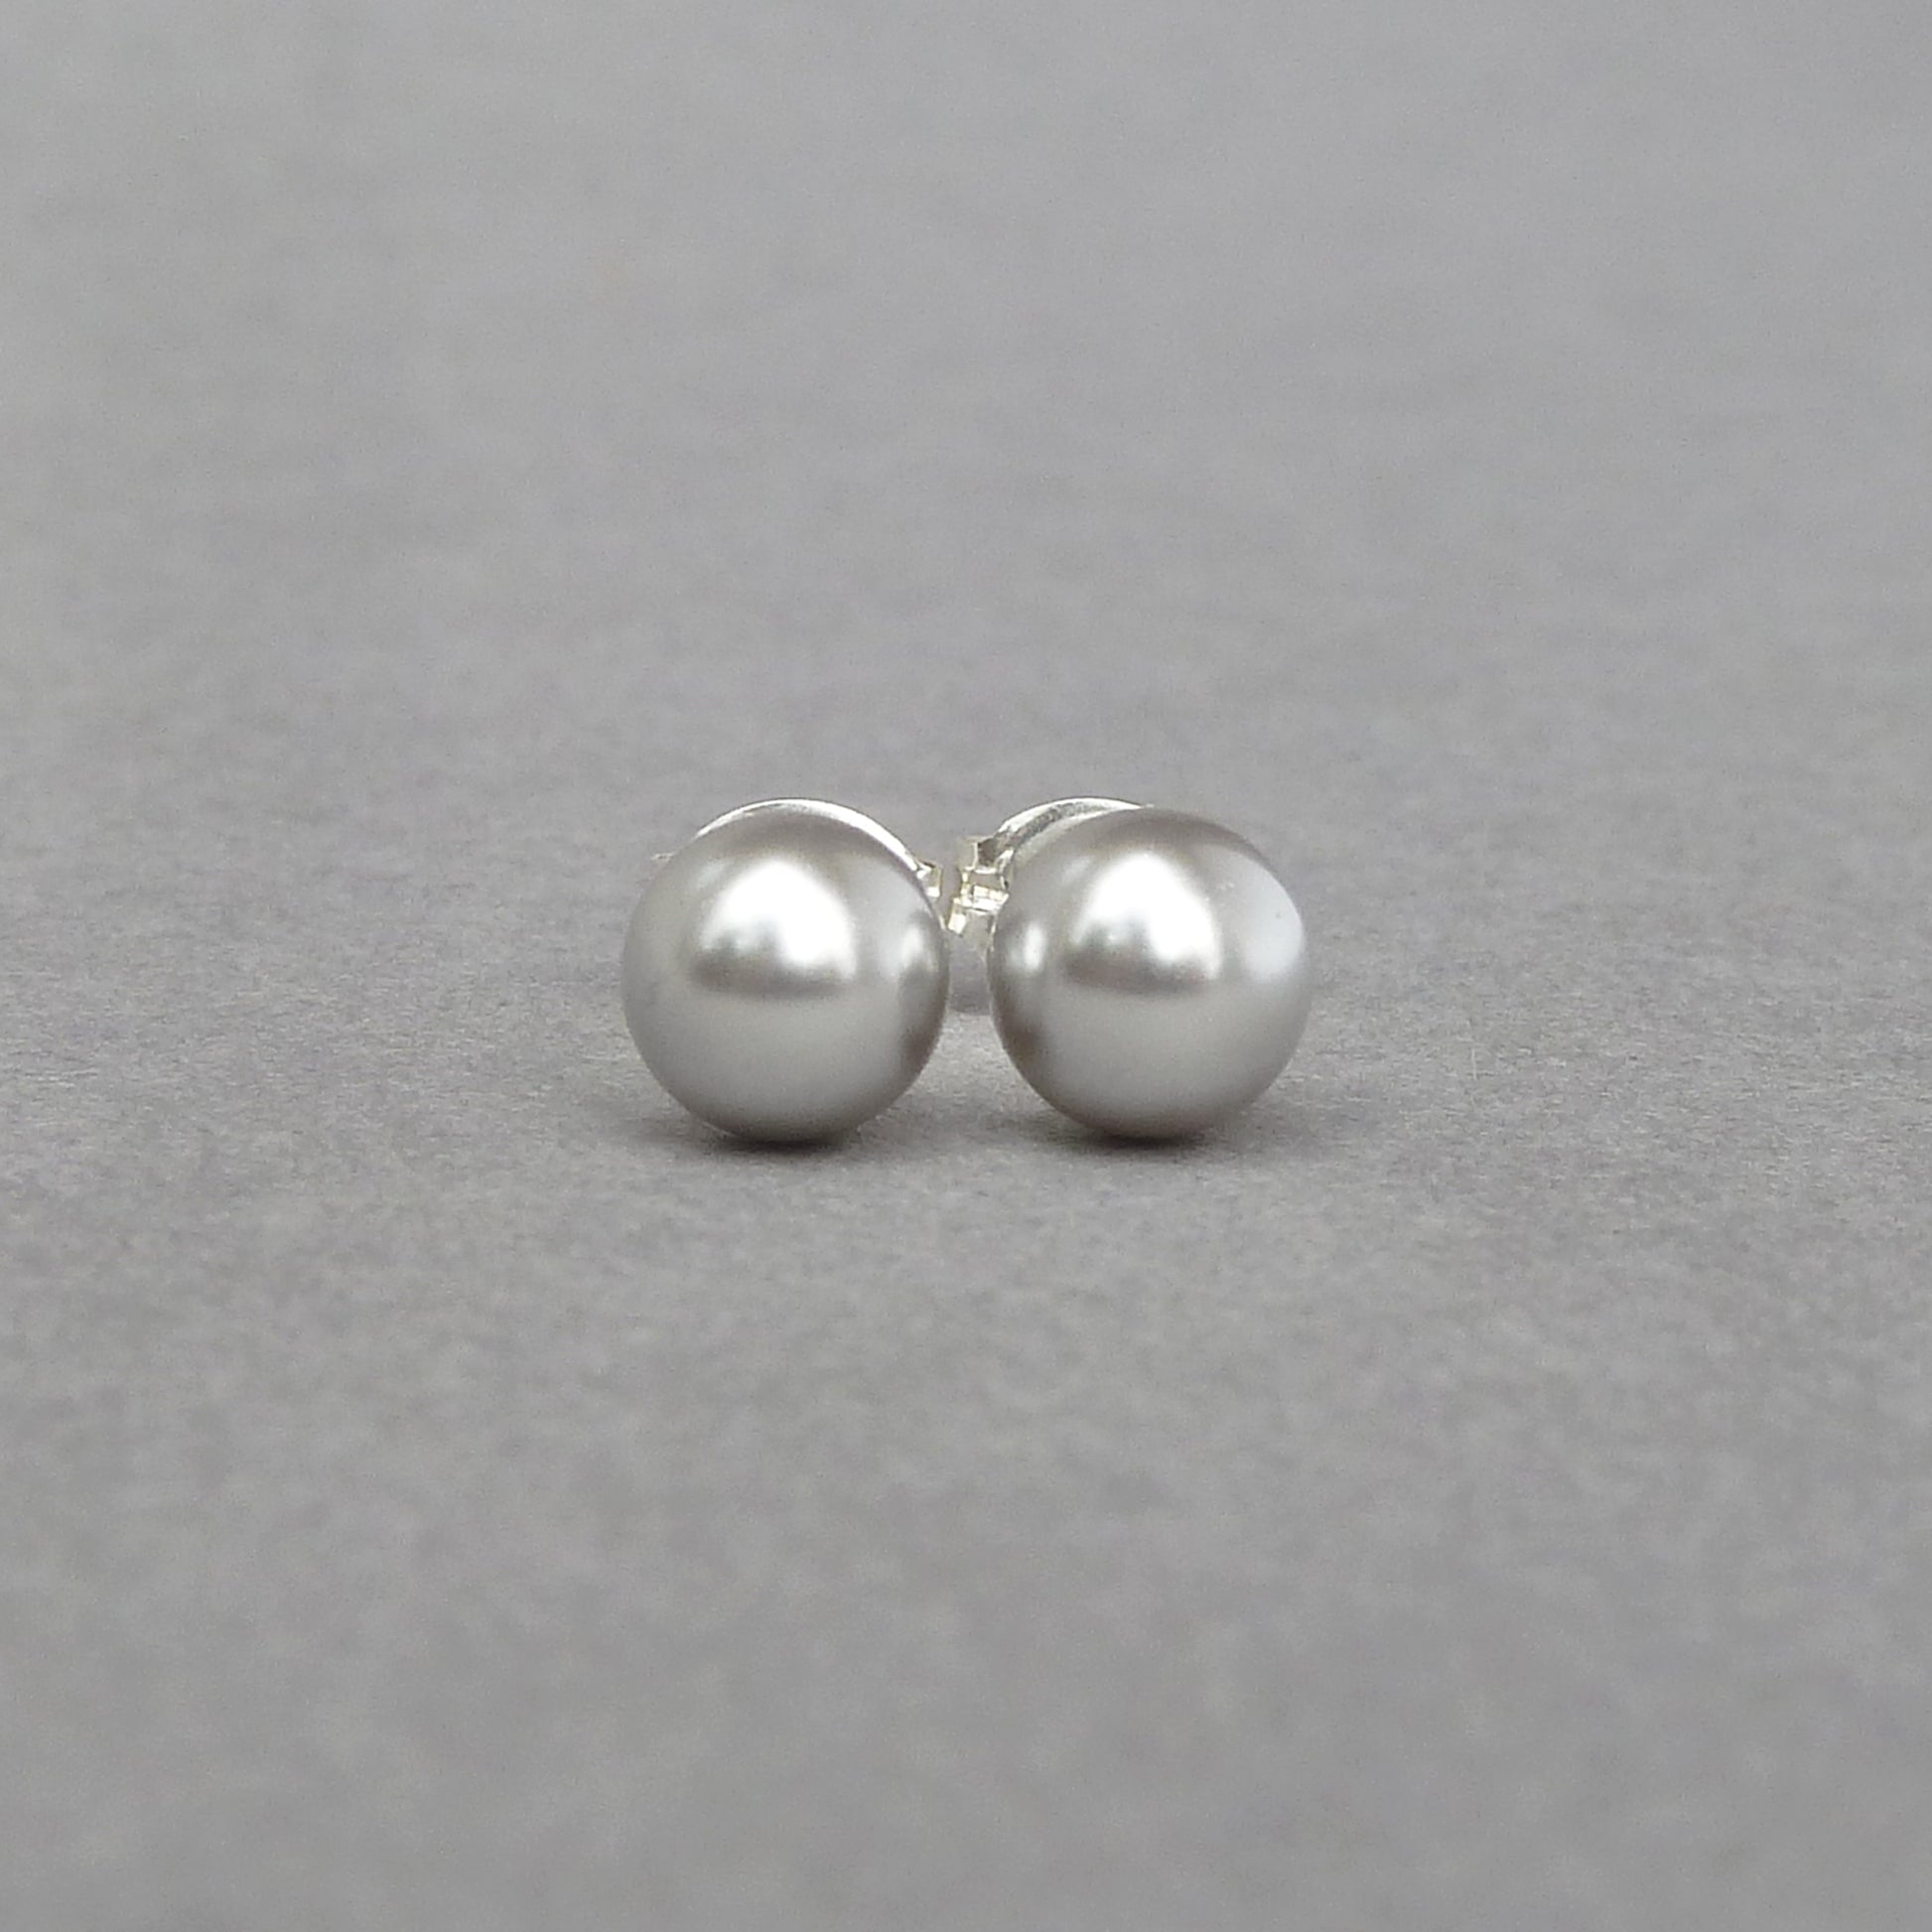 Small pale grey pearl stud earrings